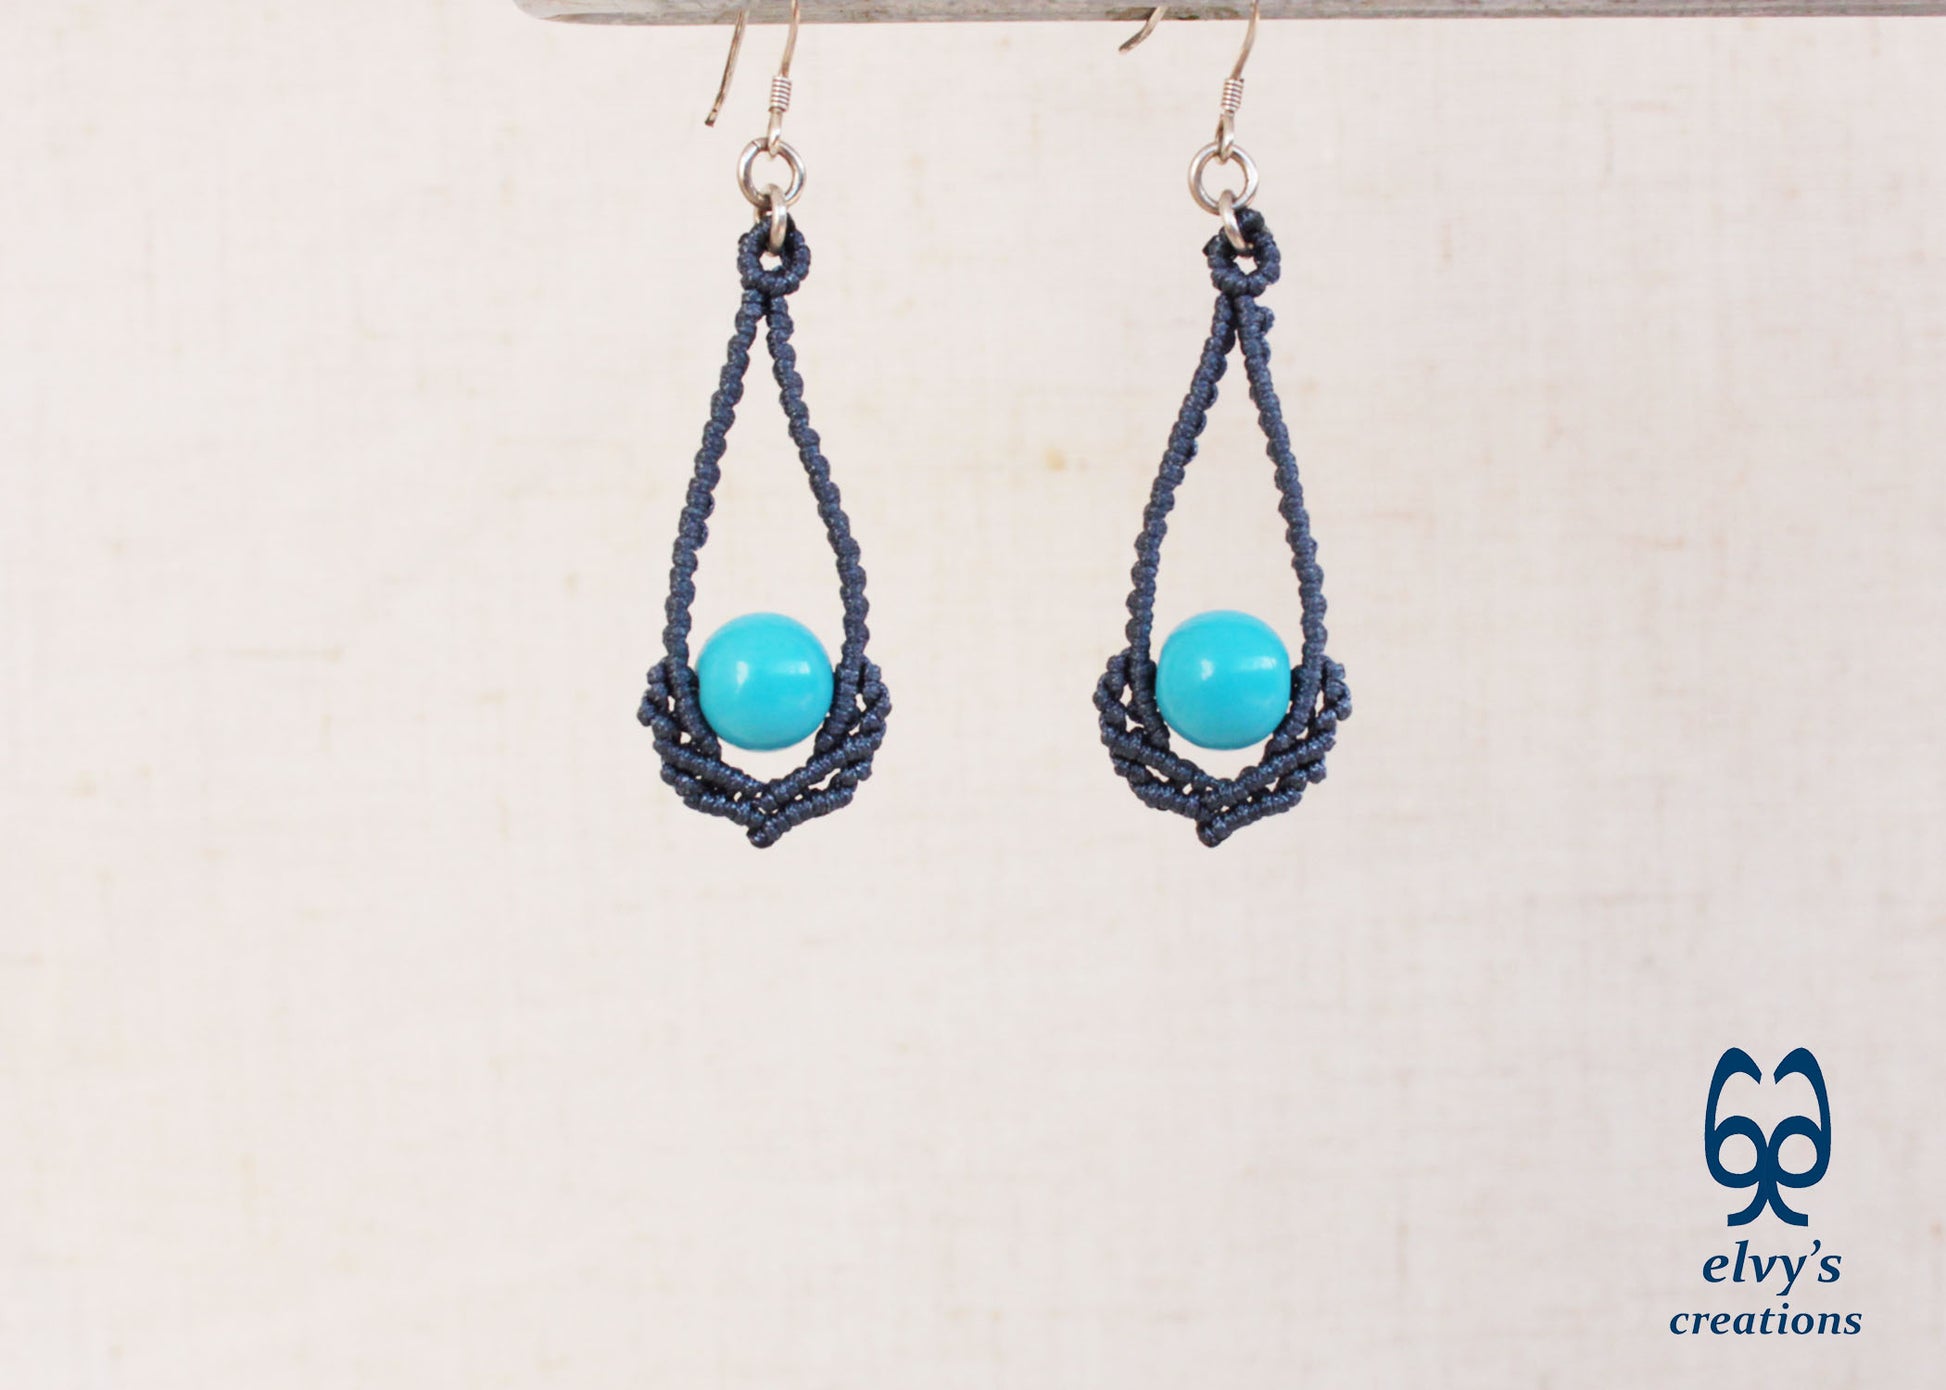 Blue Macrame Earrings Handmade Silver Earrings with Turquoise Gemstones